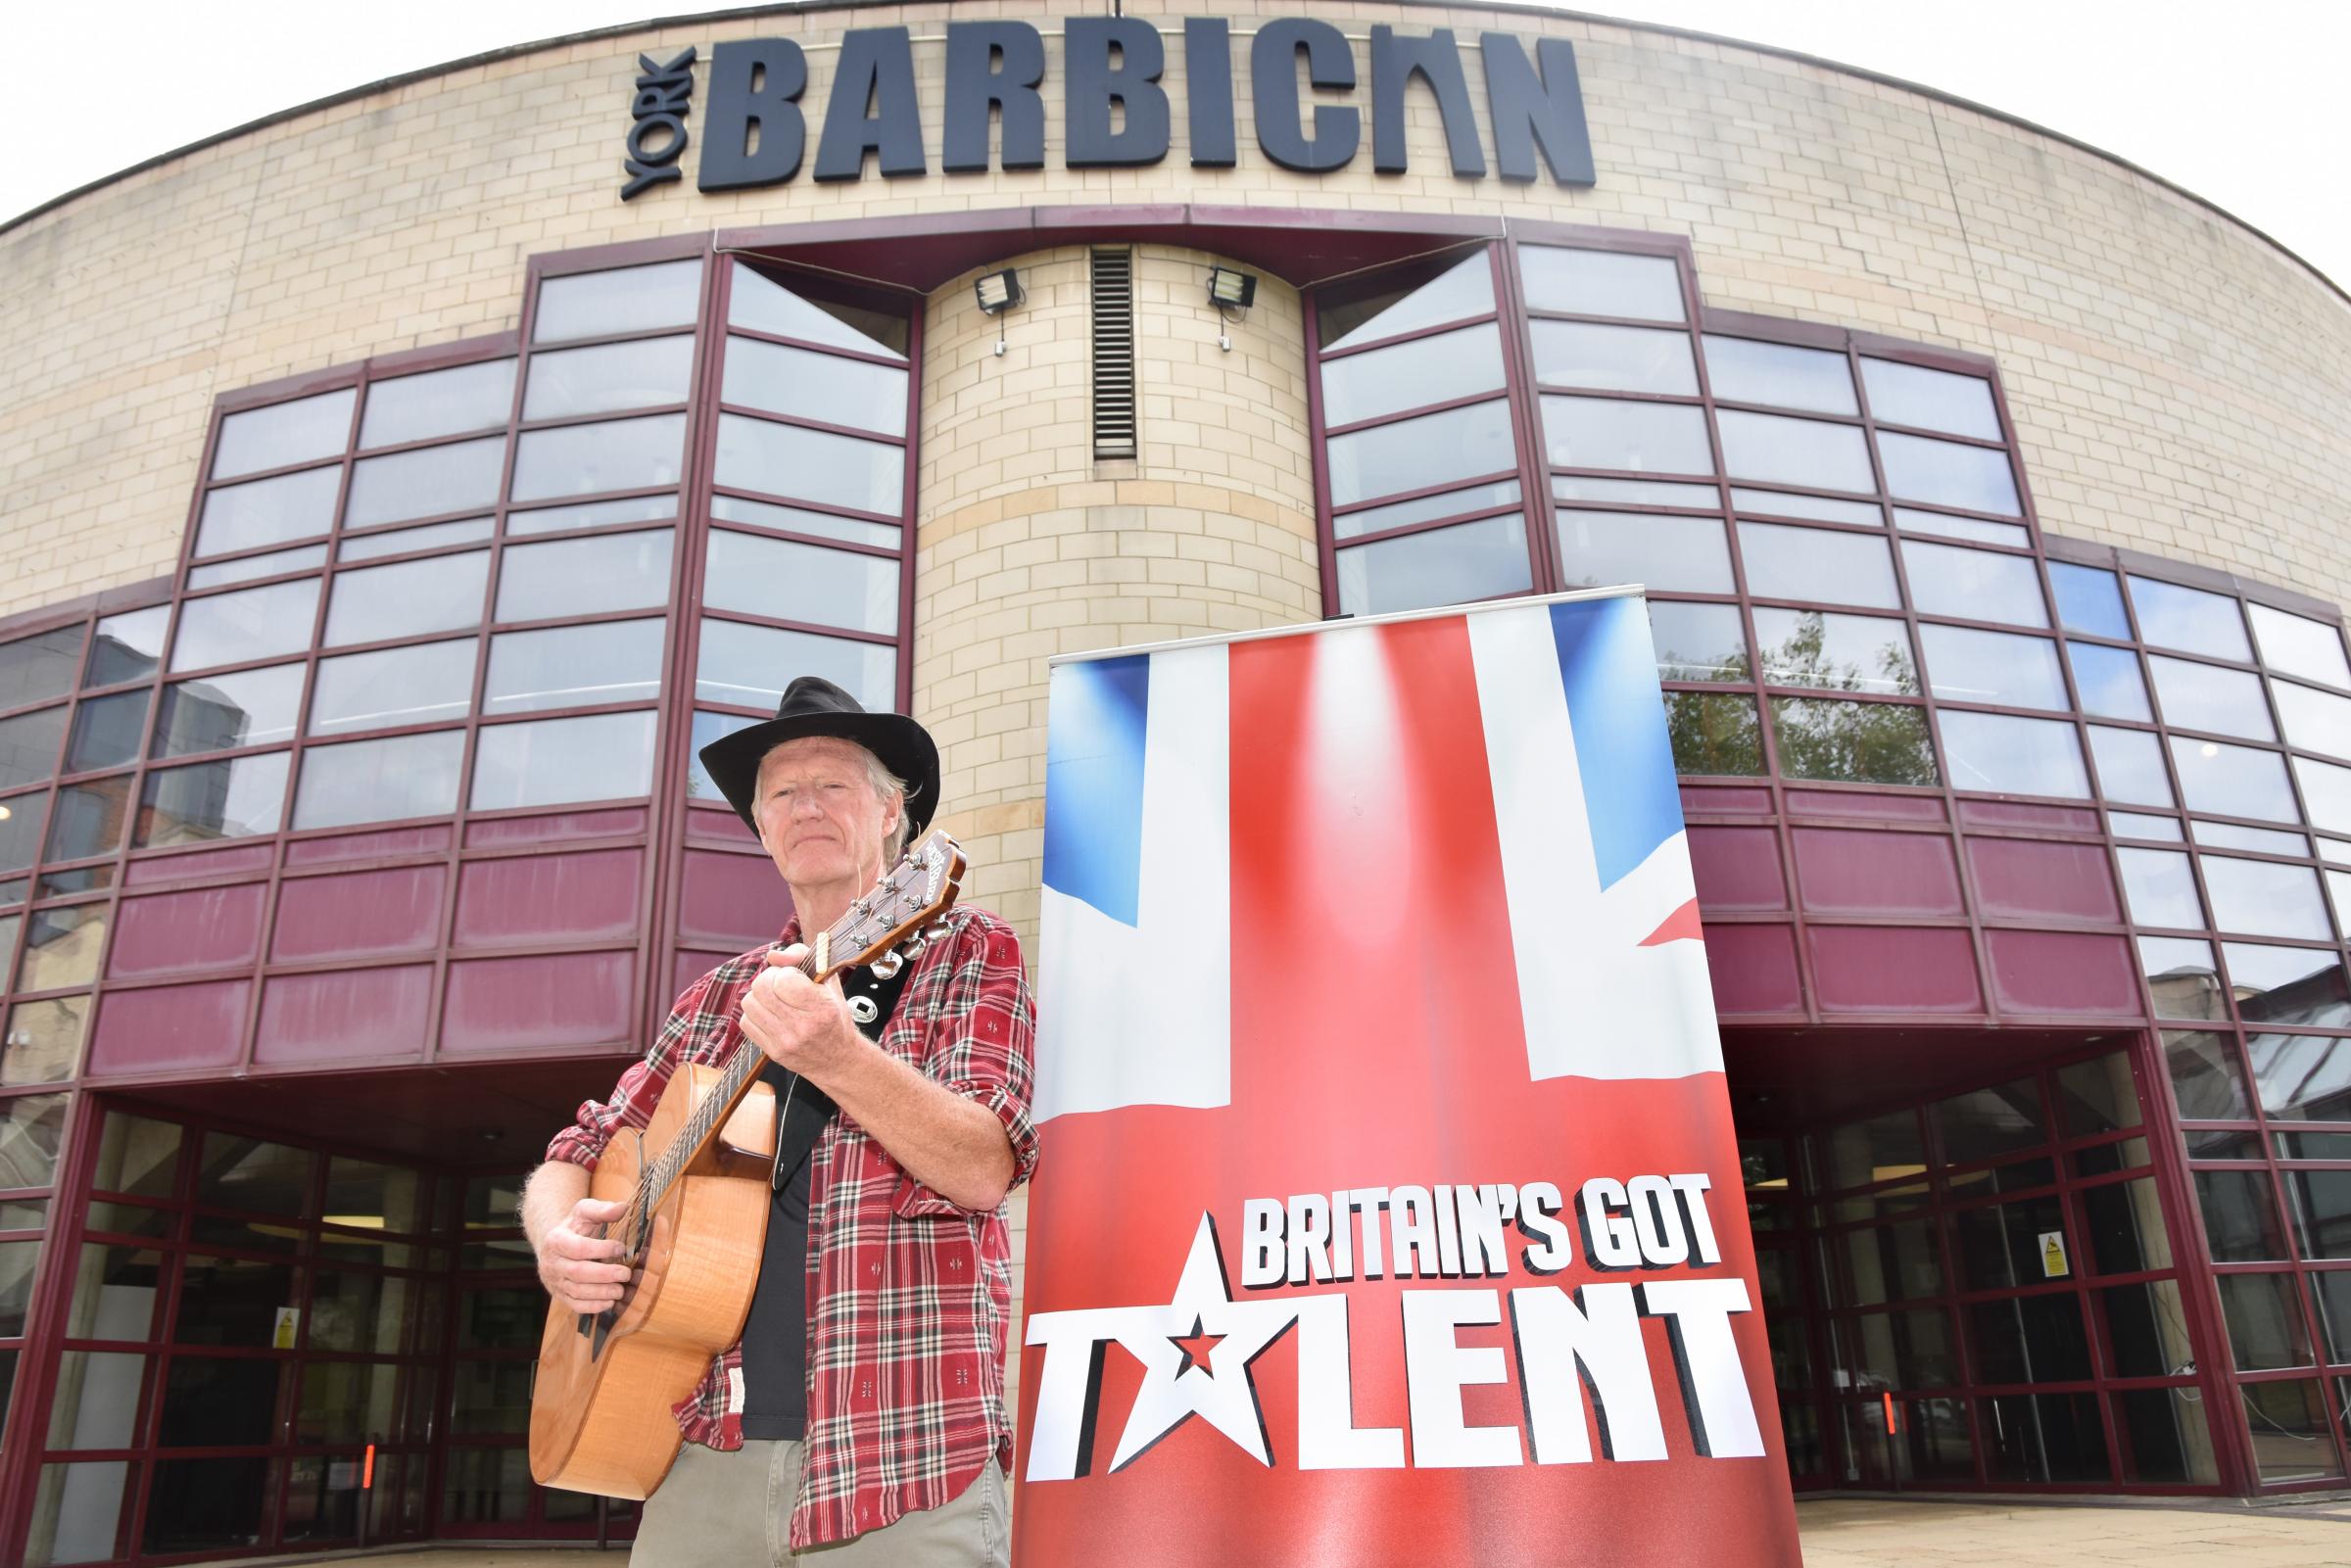 York hopefuls strut their stuff for ITV's Britain's Got Talent